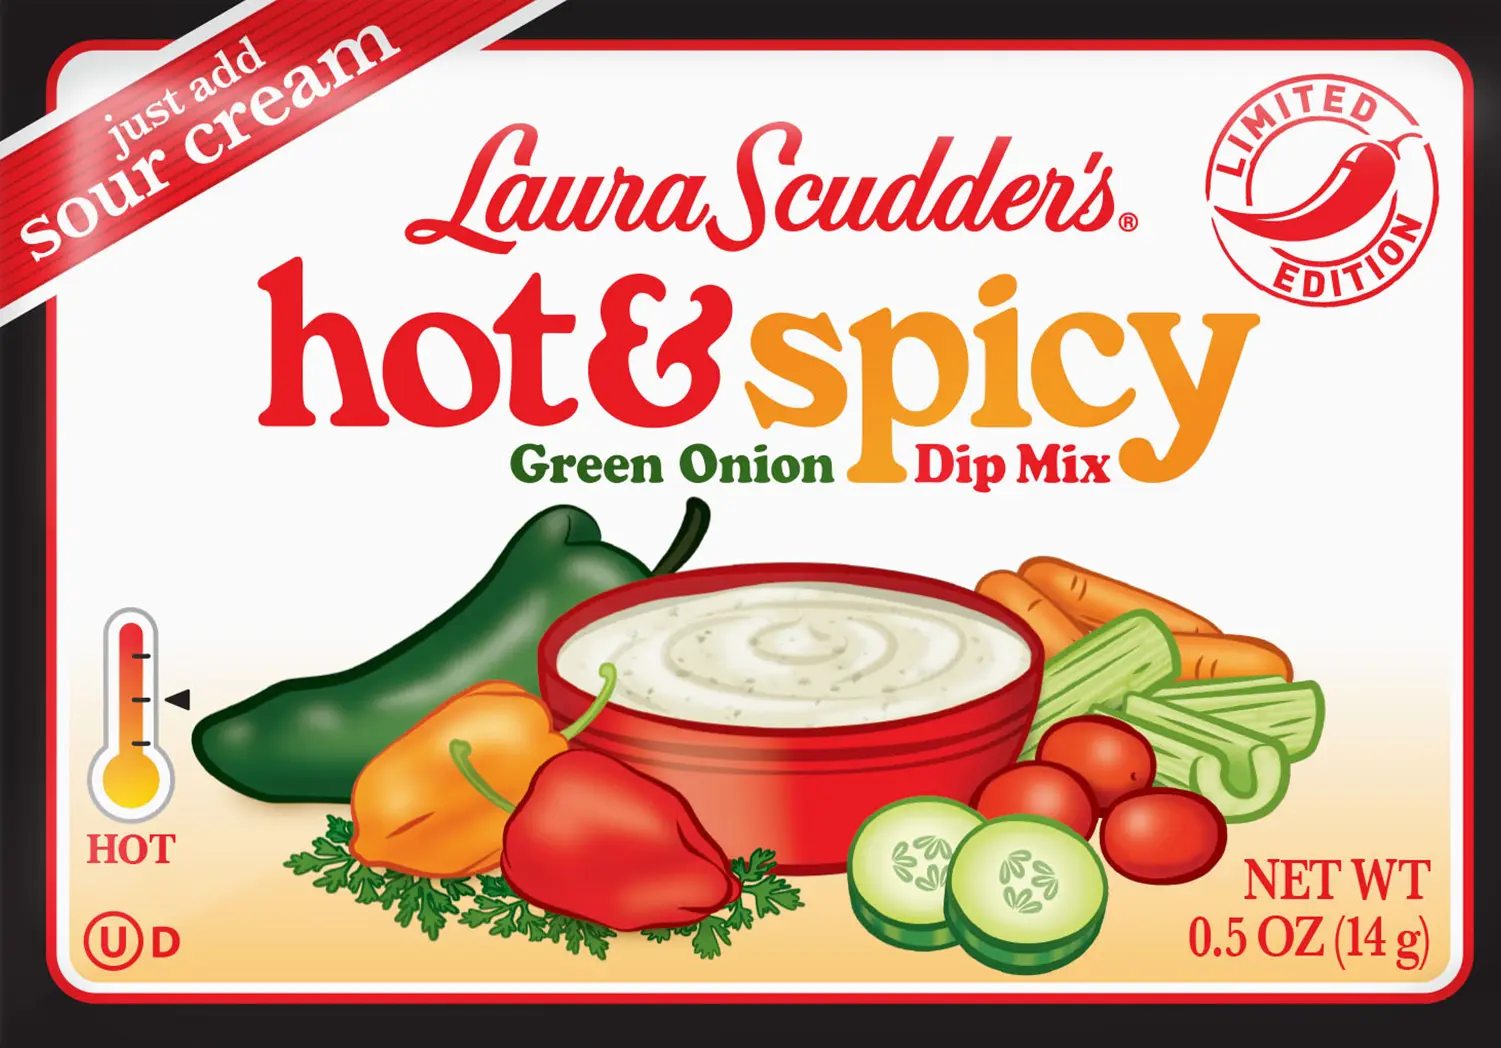 Laura Scudder's Green Onion Dip Mix 0.5 oz 3 Pack